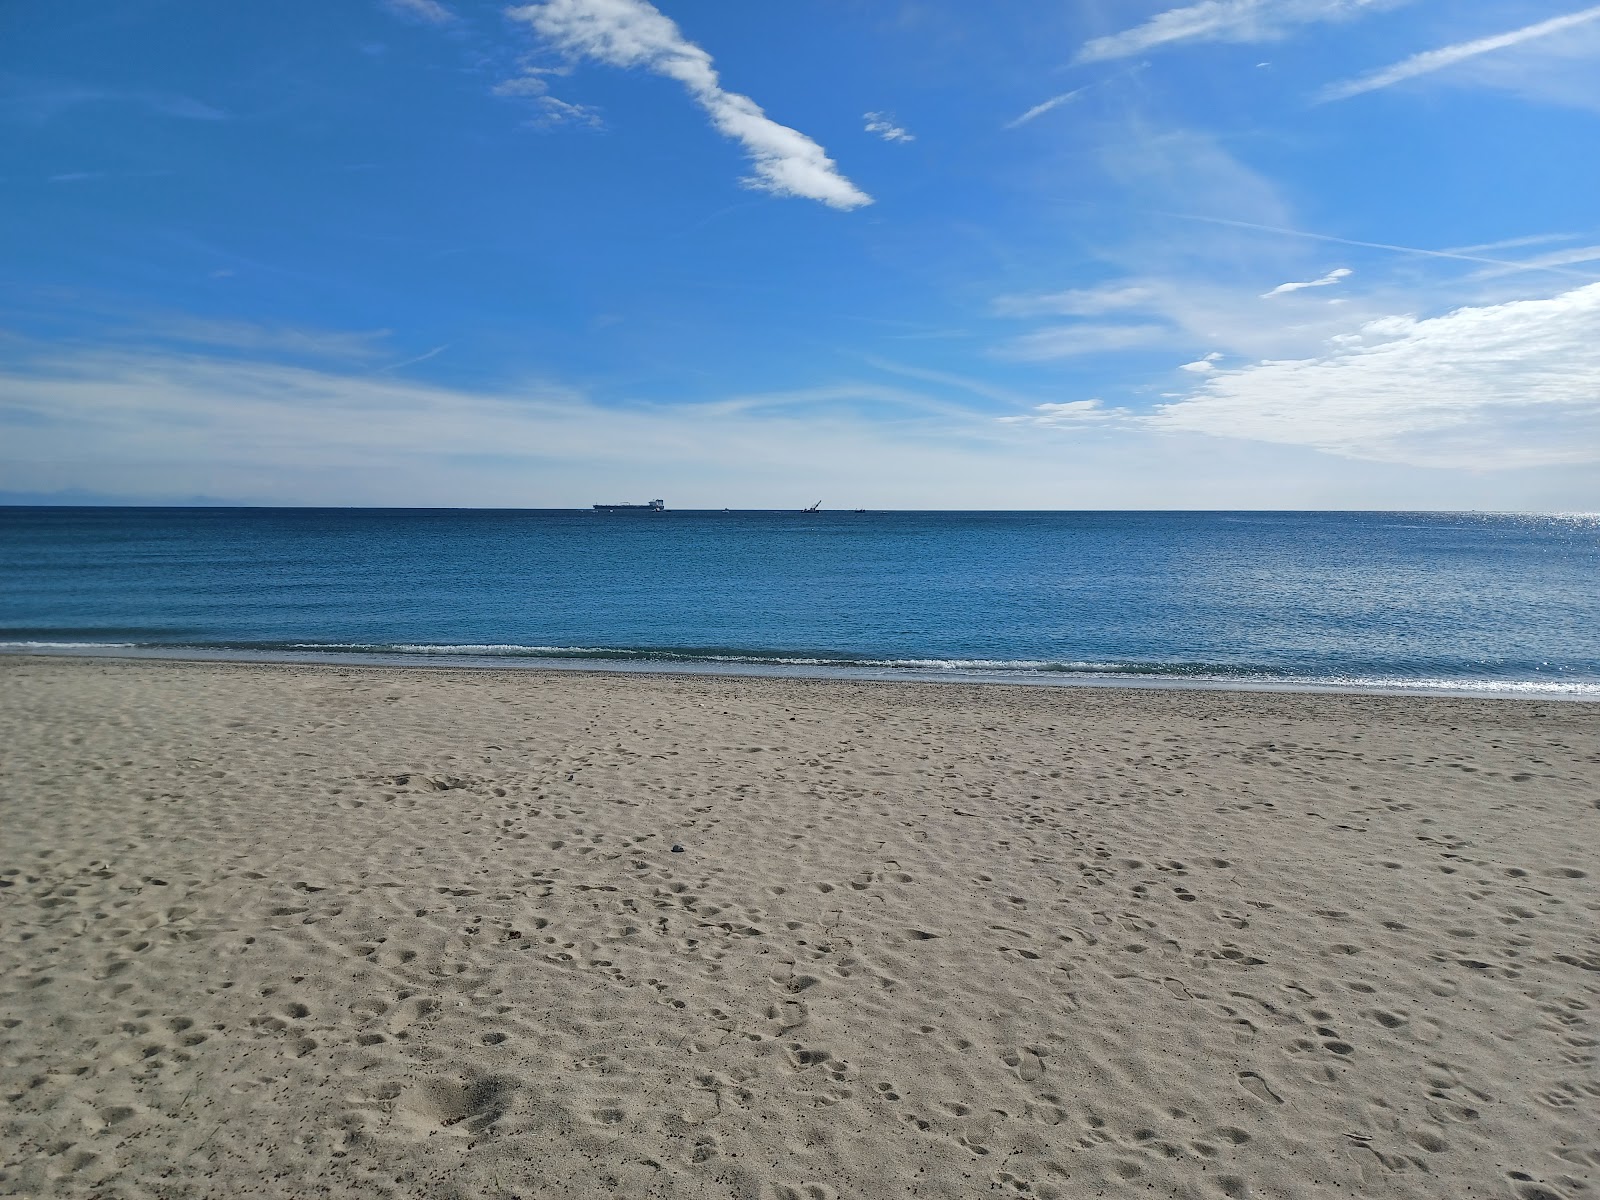 Foto de Spiaggia di Zinola - lugar popular entre os apreciadores de relaxamento